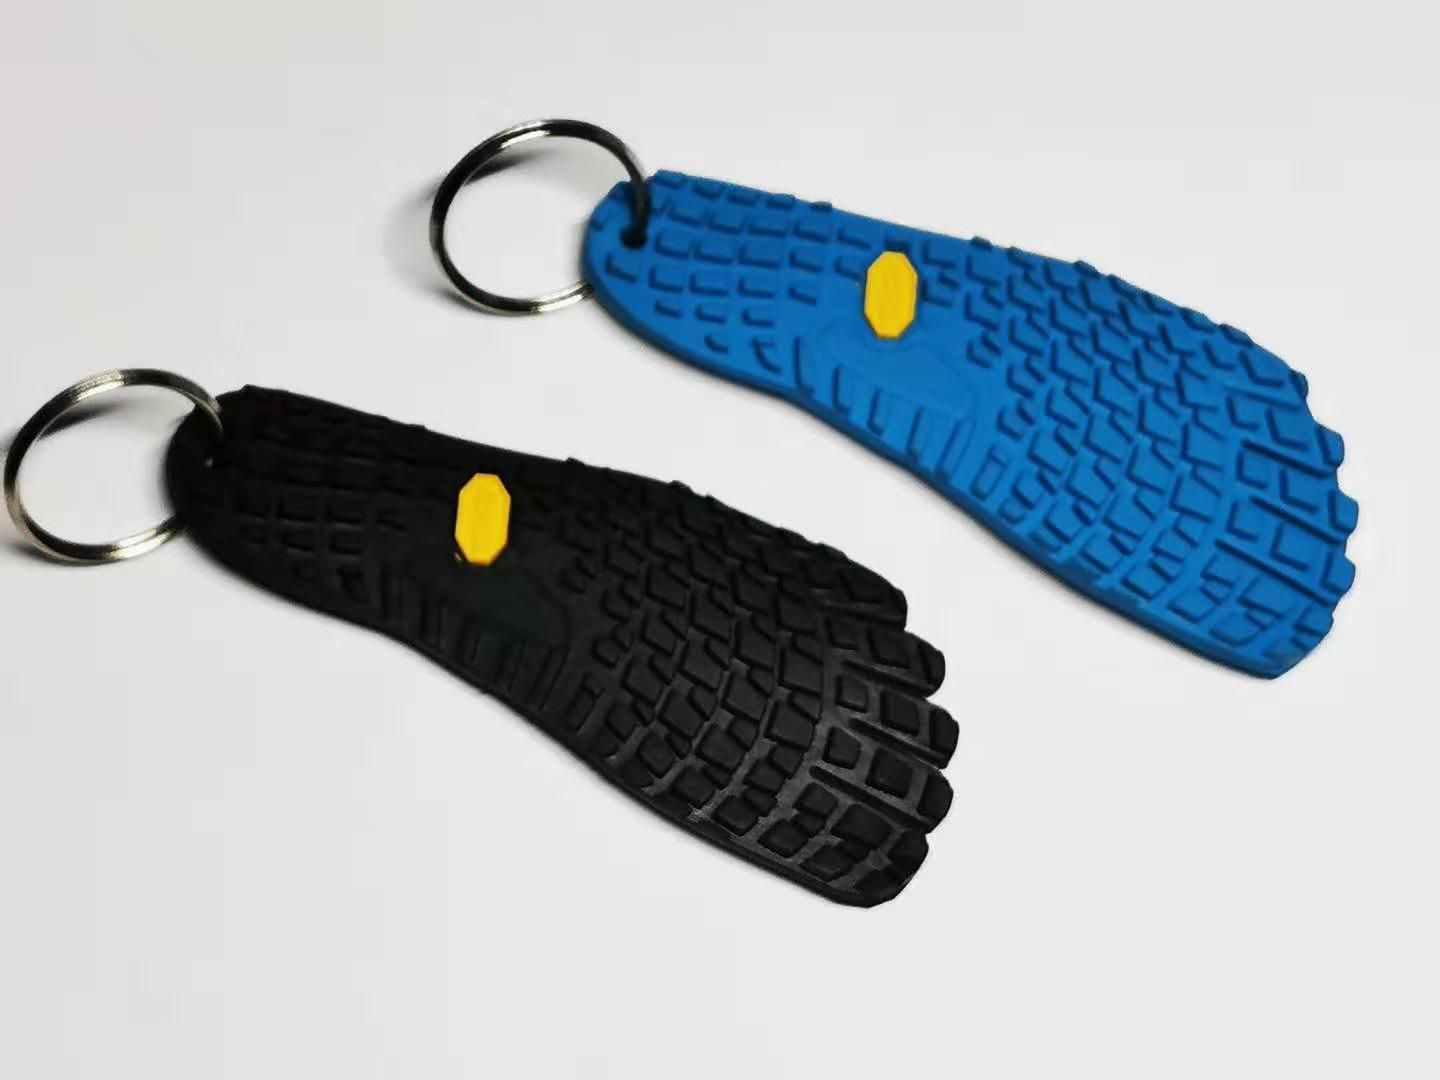 Vibram Keychain/Luggage Tag - Spyridon (2 Colors)